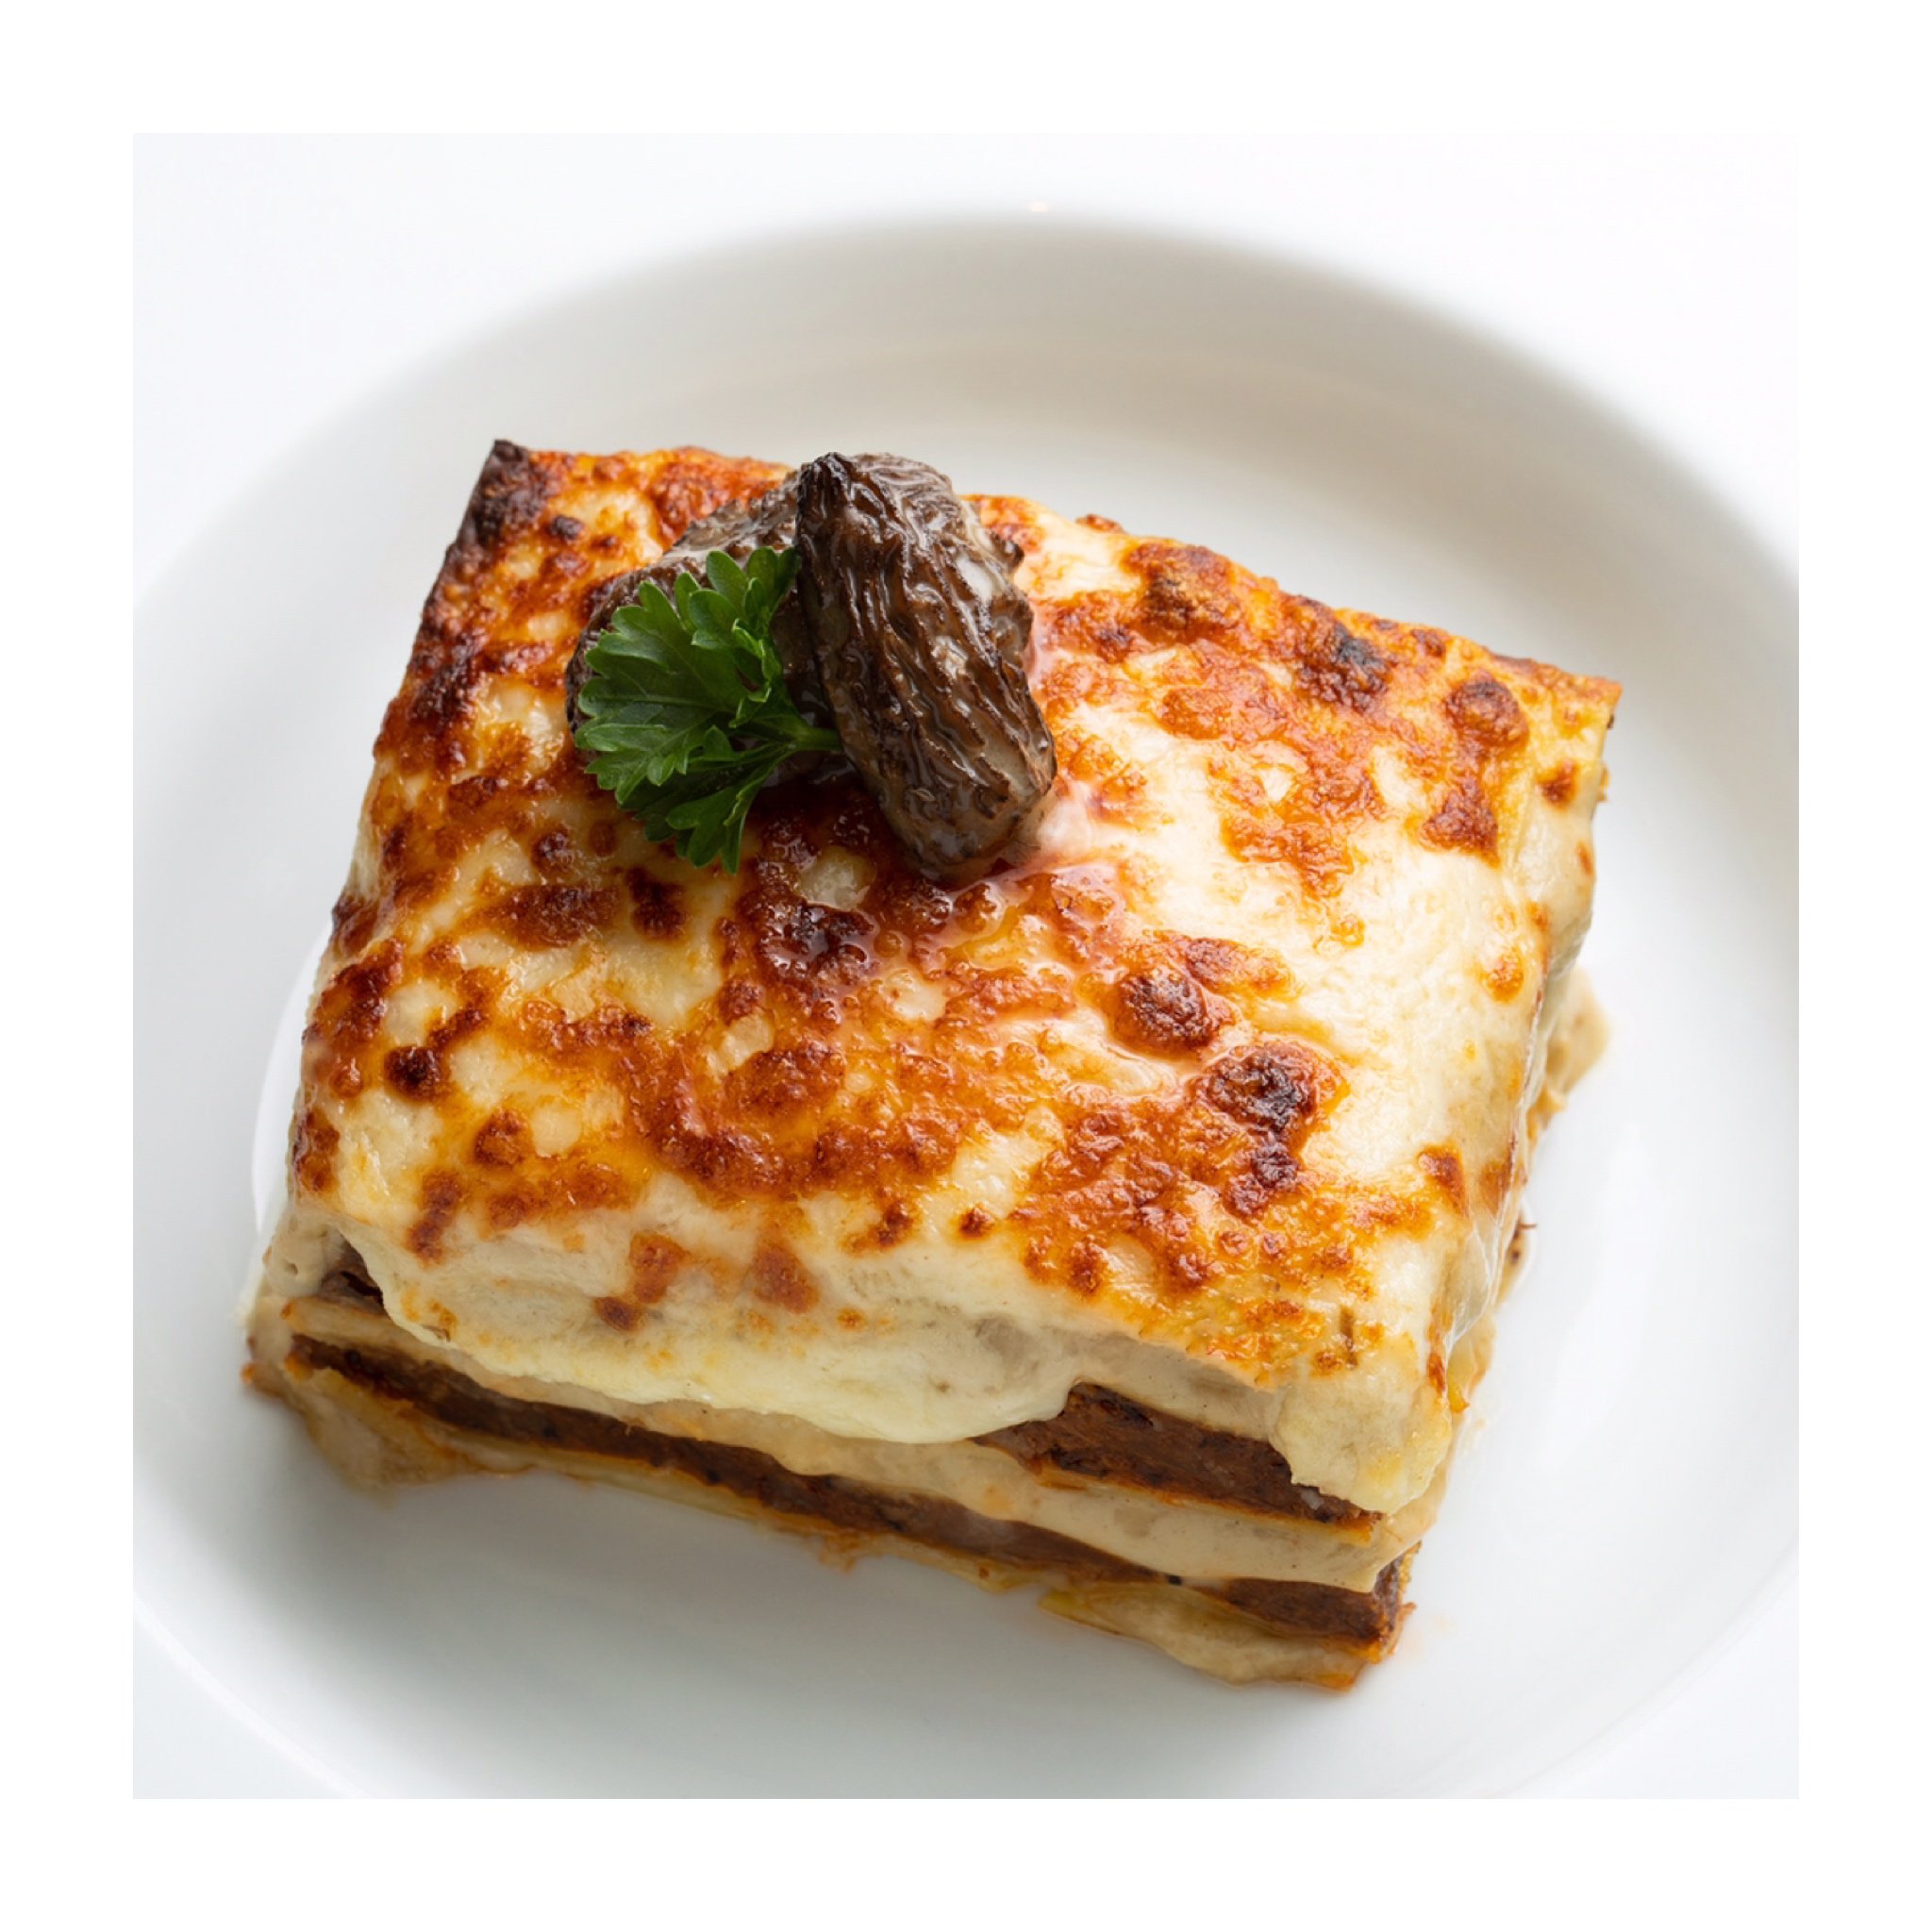 Braised Short Rib and Mushroom Lasagna (Partnership with All-Clad)